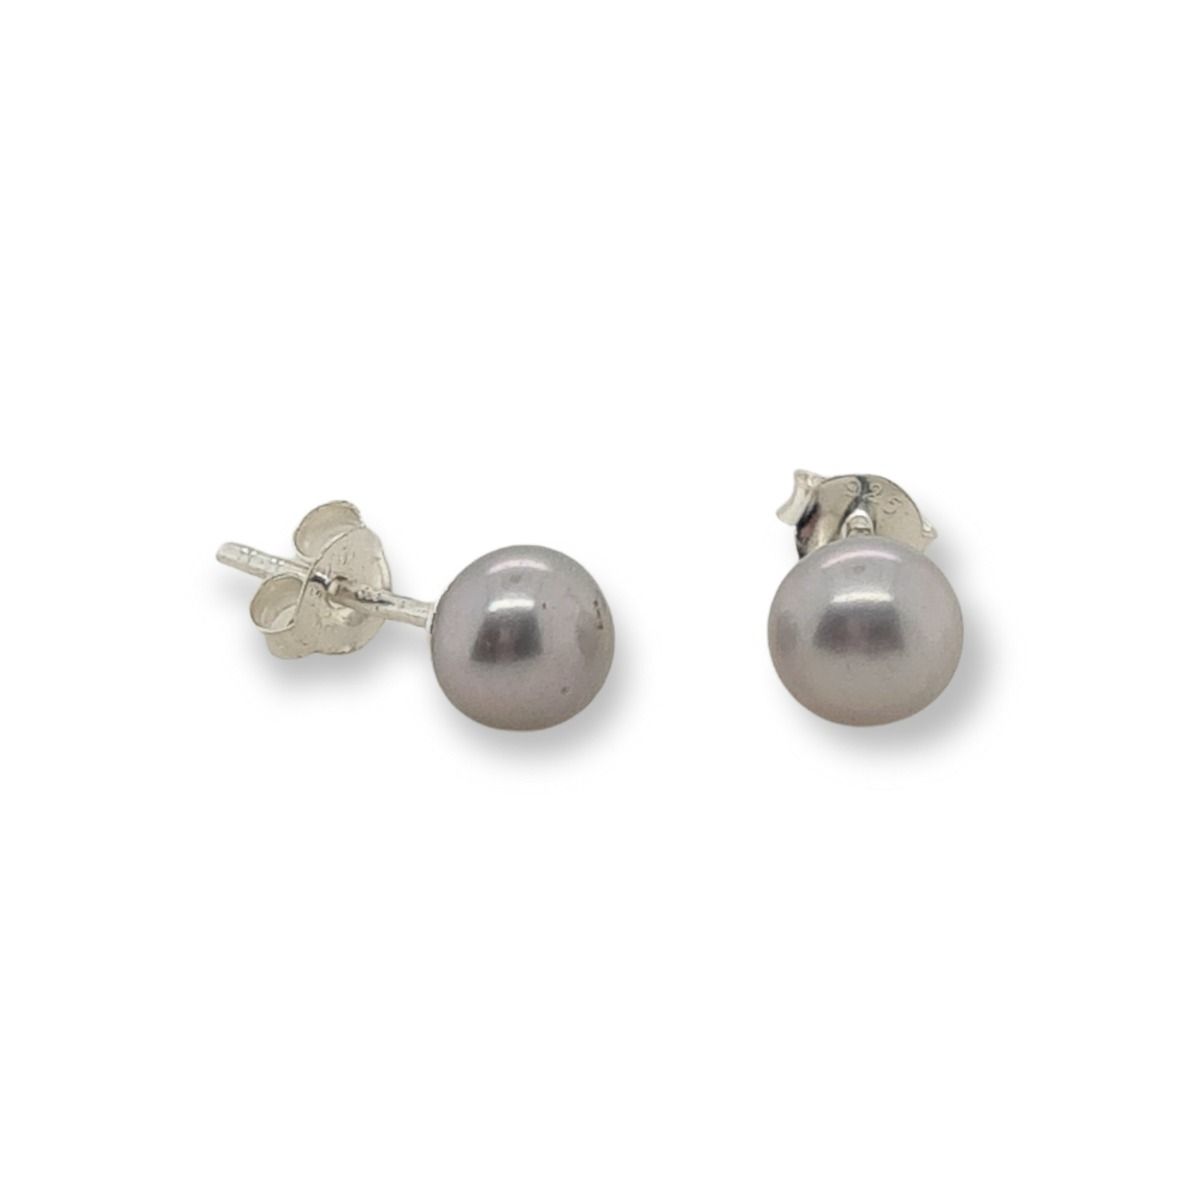 MCJ S/S Earrings with Silver Pearl - 6mm